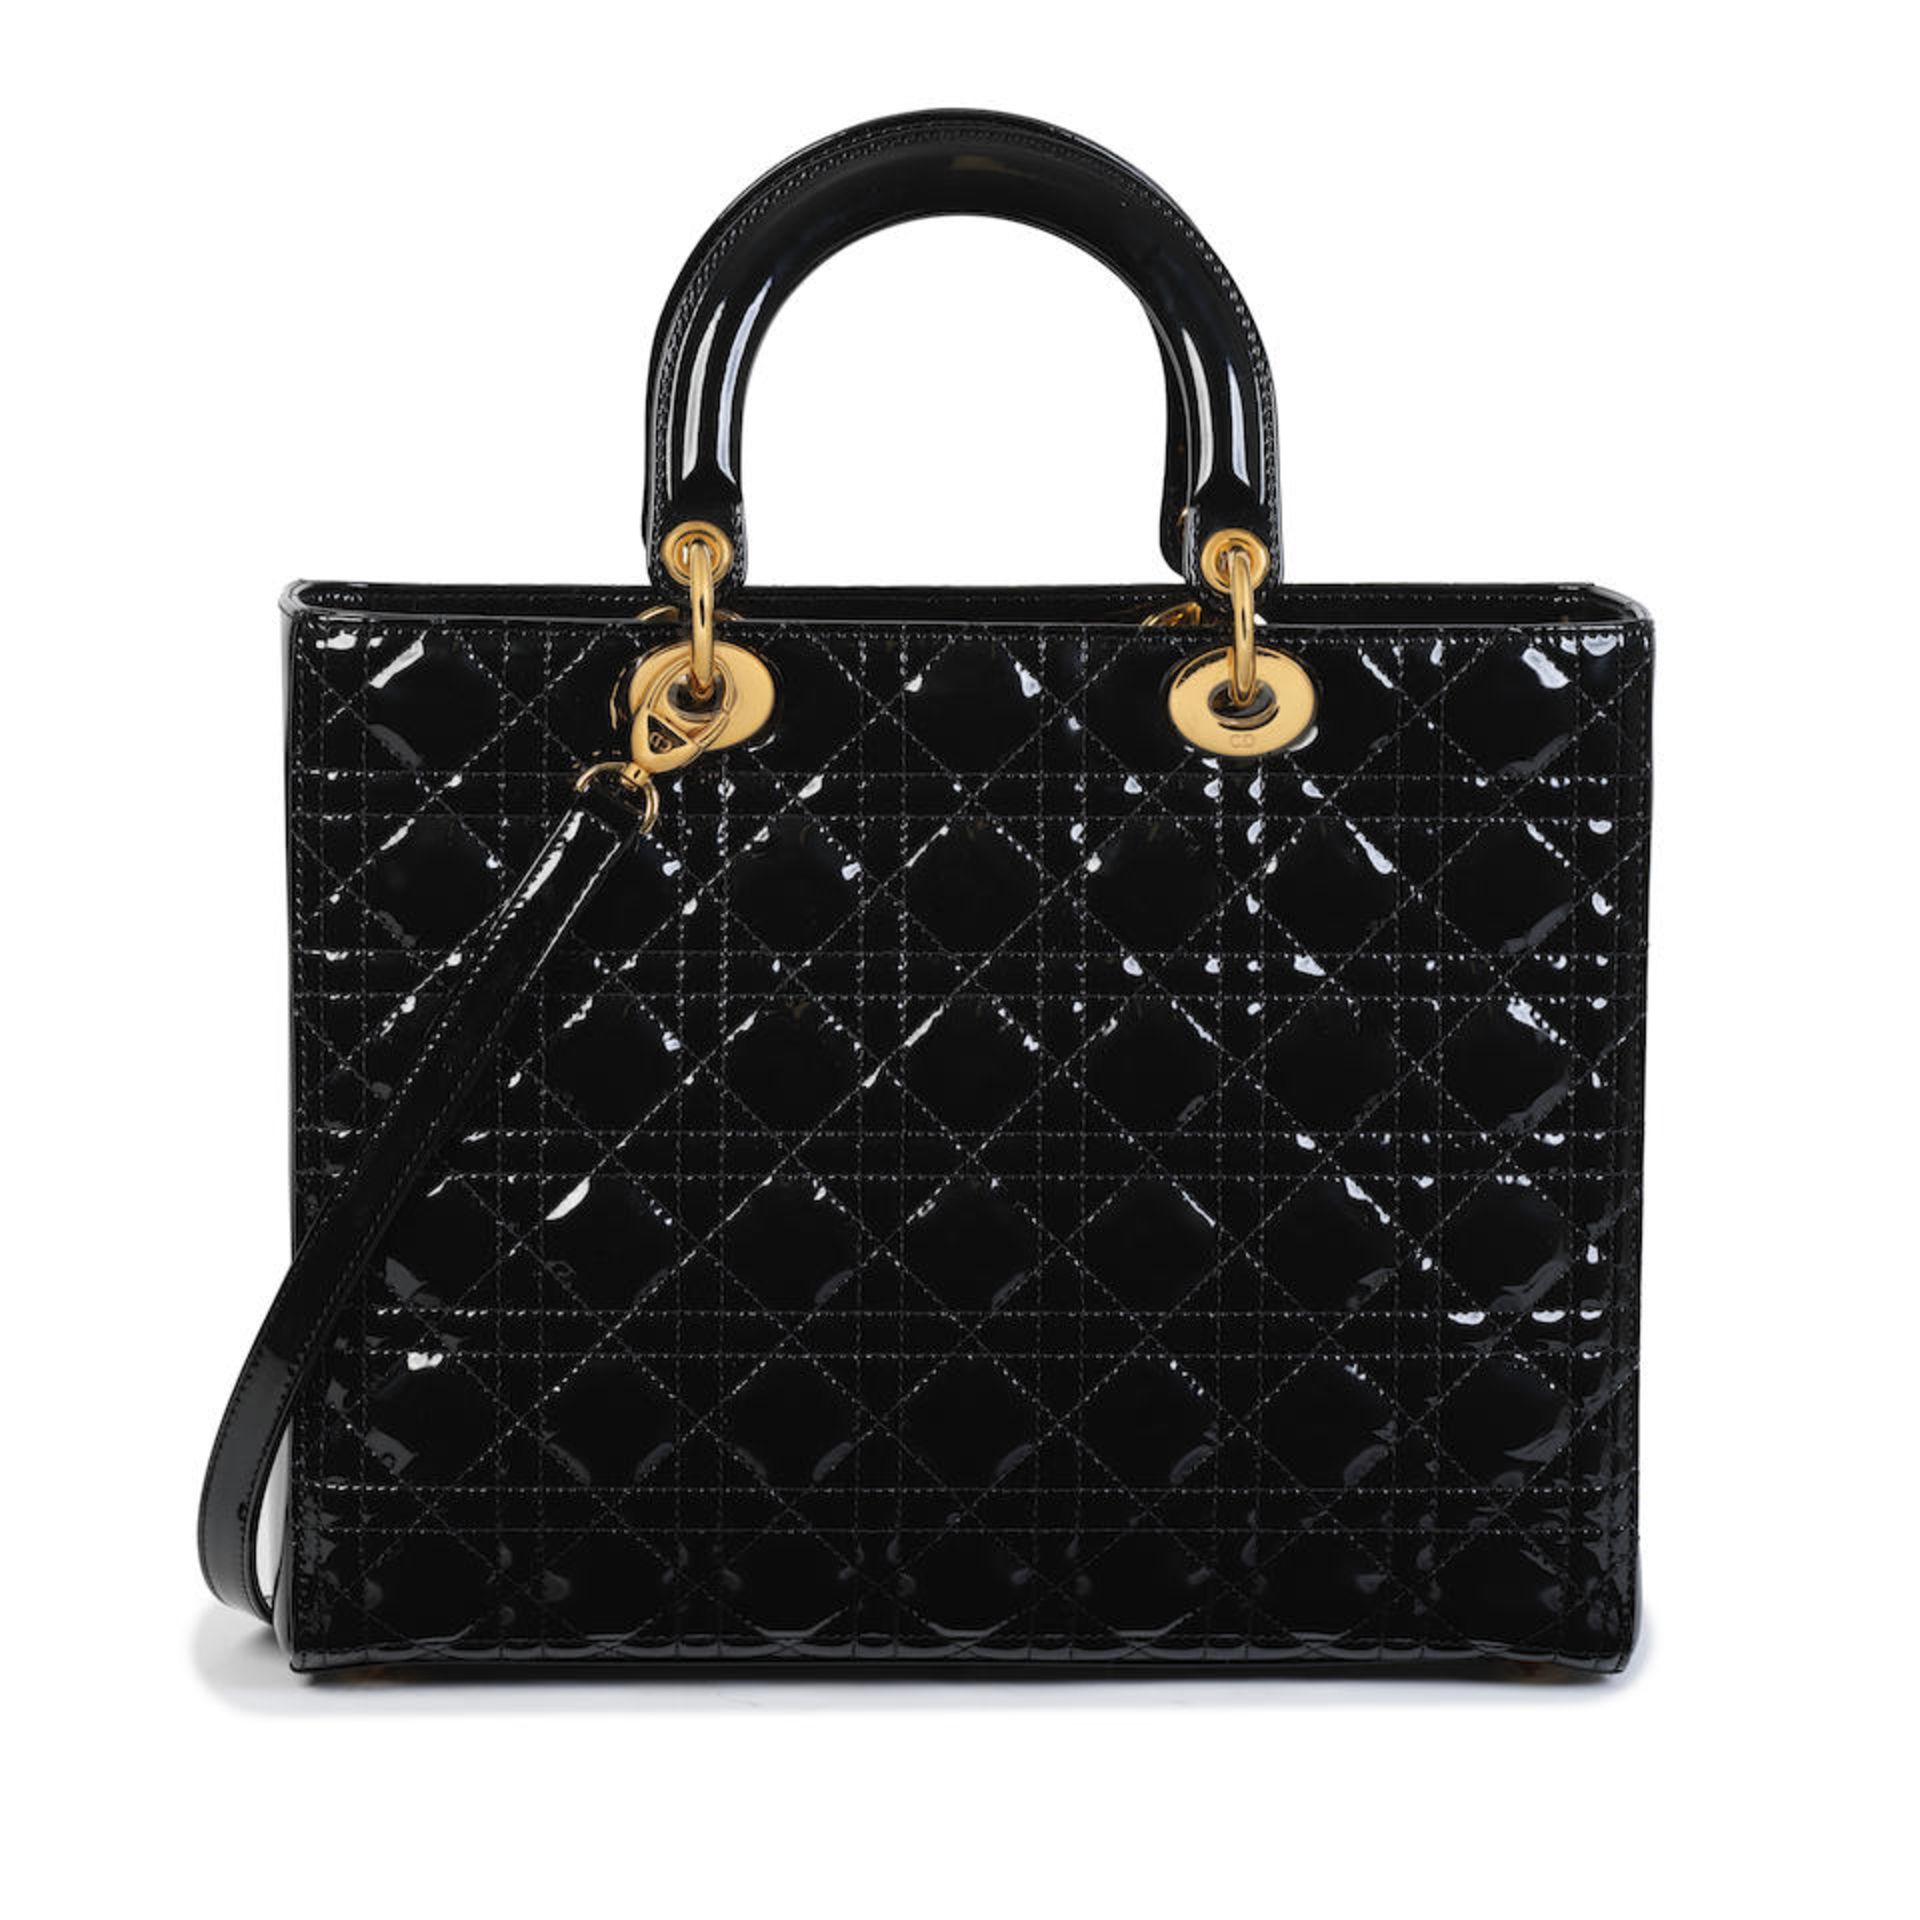 Christian Dior: a Black Patent Leather Large Lady Dior 2011 (includes shoulder strap, authentici... - Bild 3 aus 3